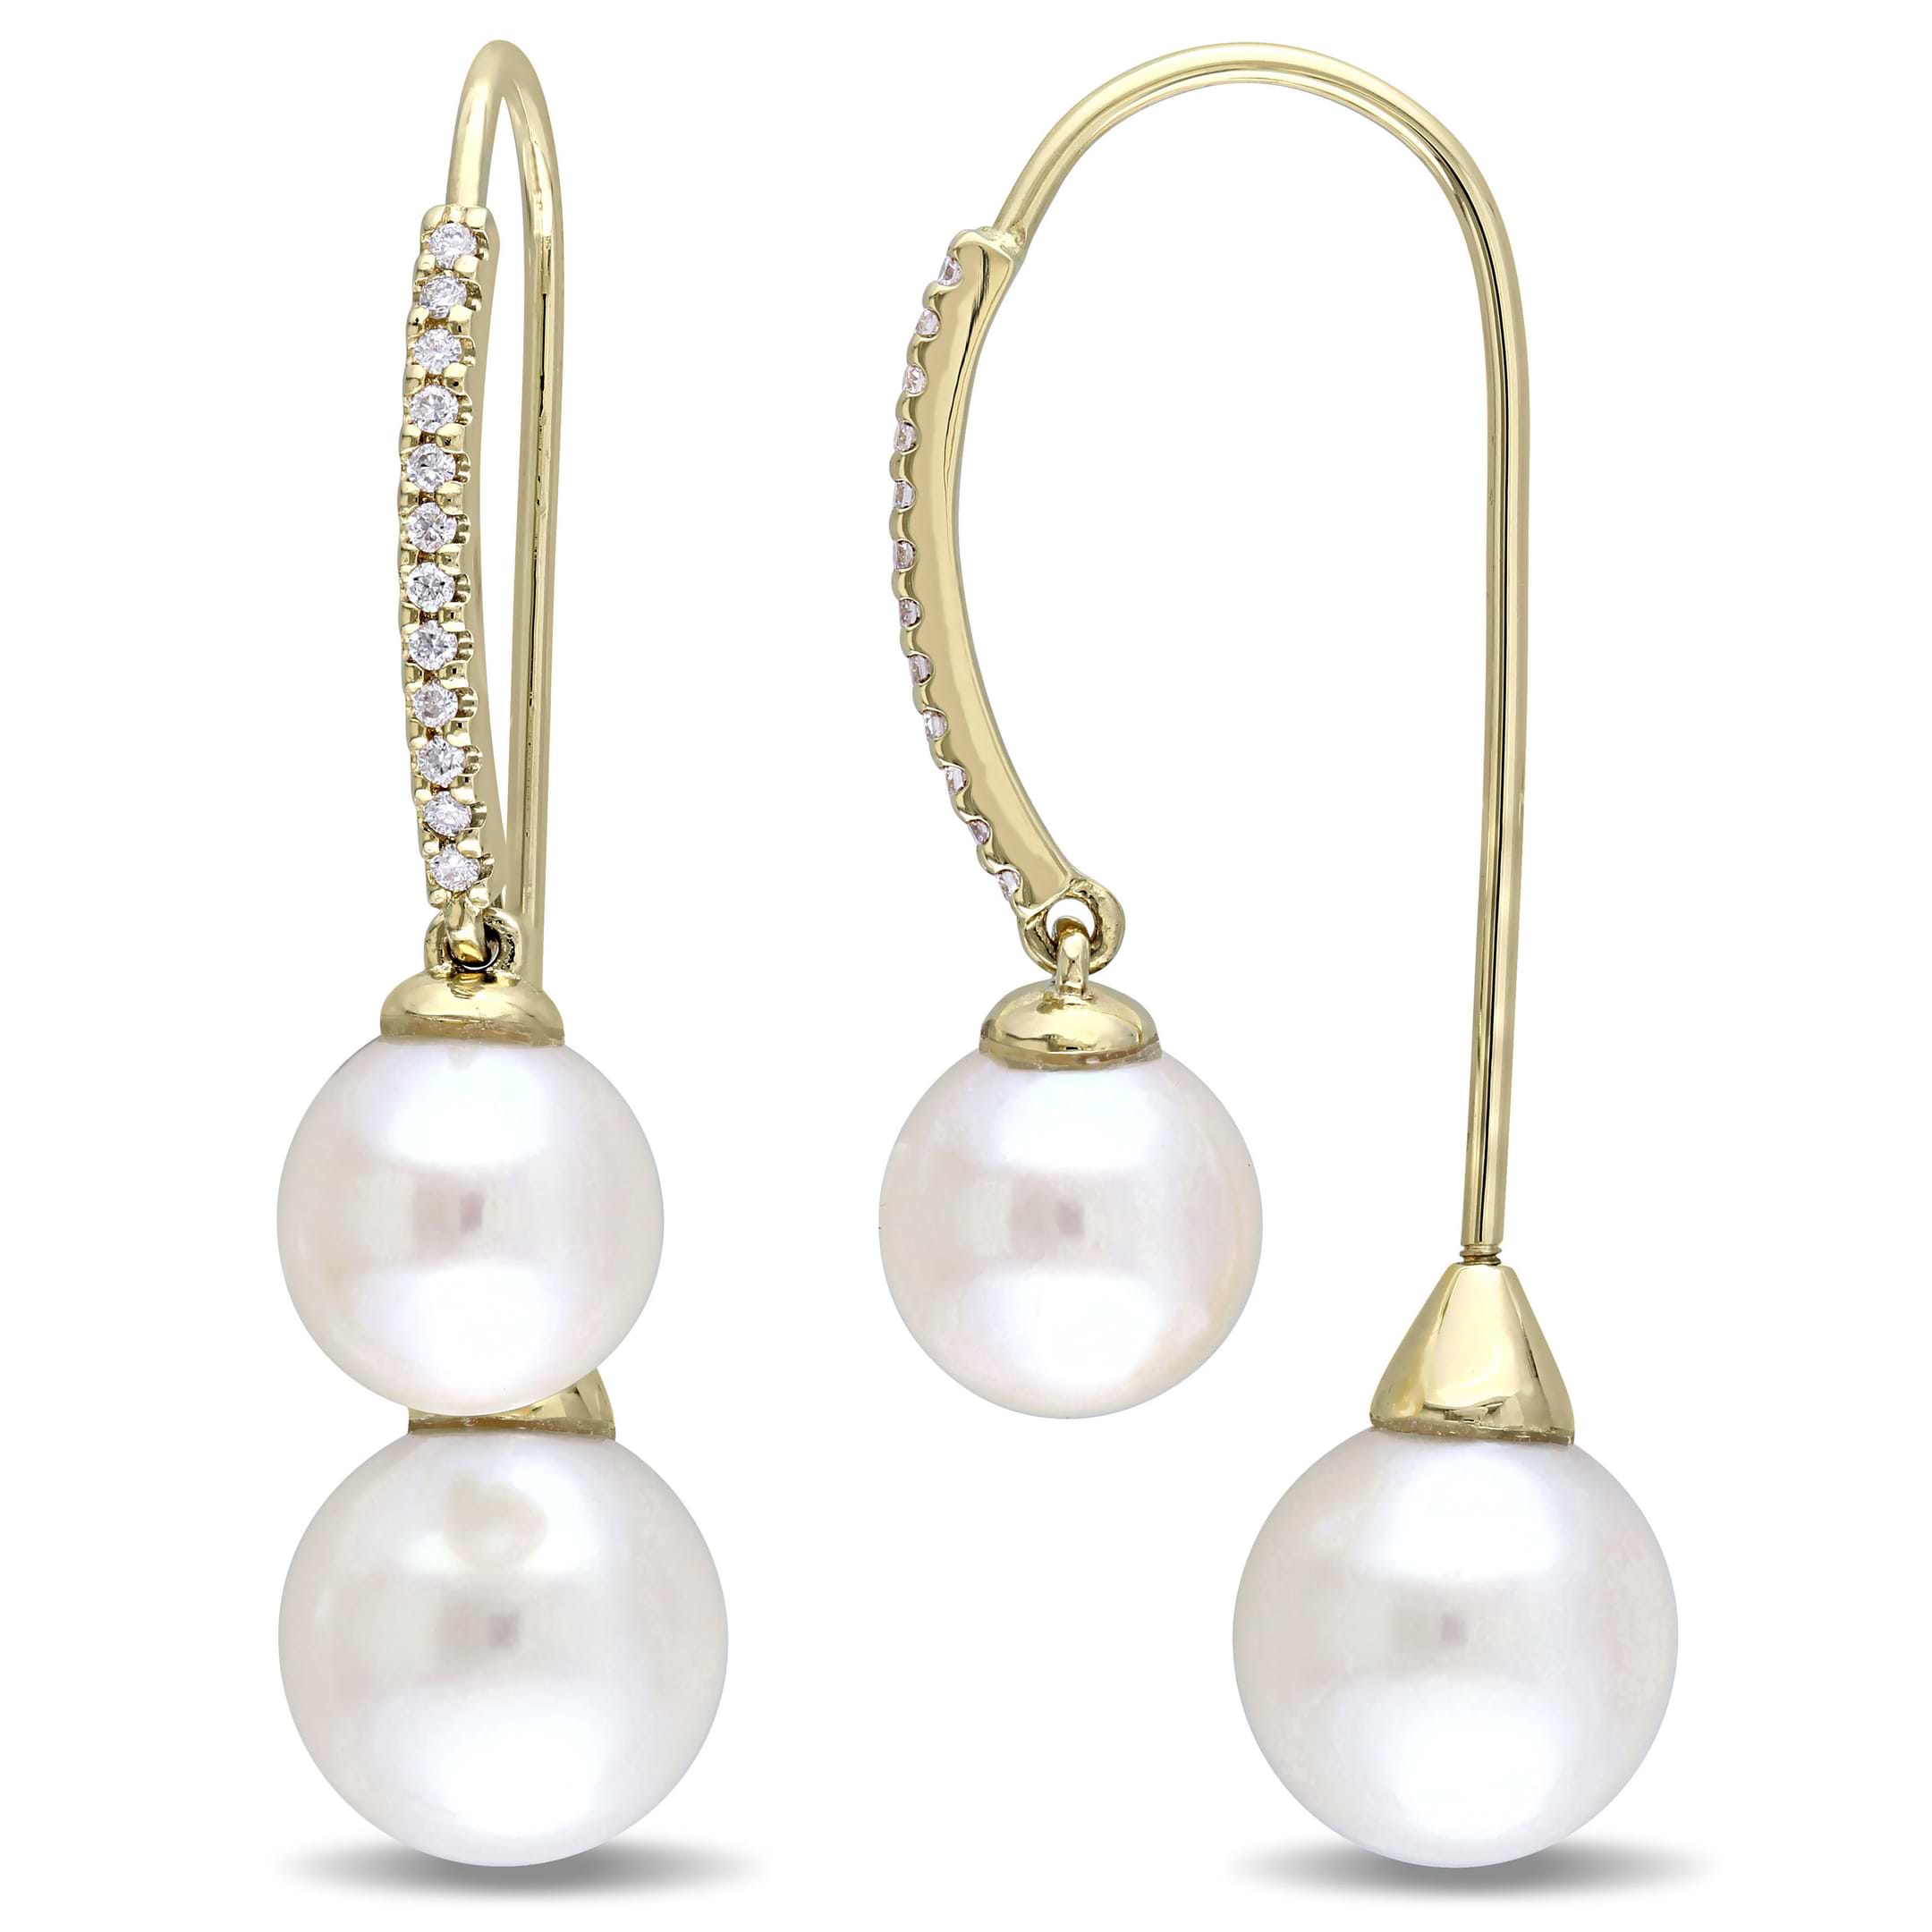 Round Pearl & Diamond Dangling Earrings 14k Yellow Gold (0.14ct)